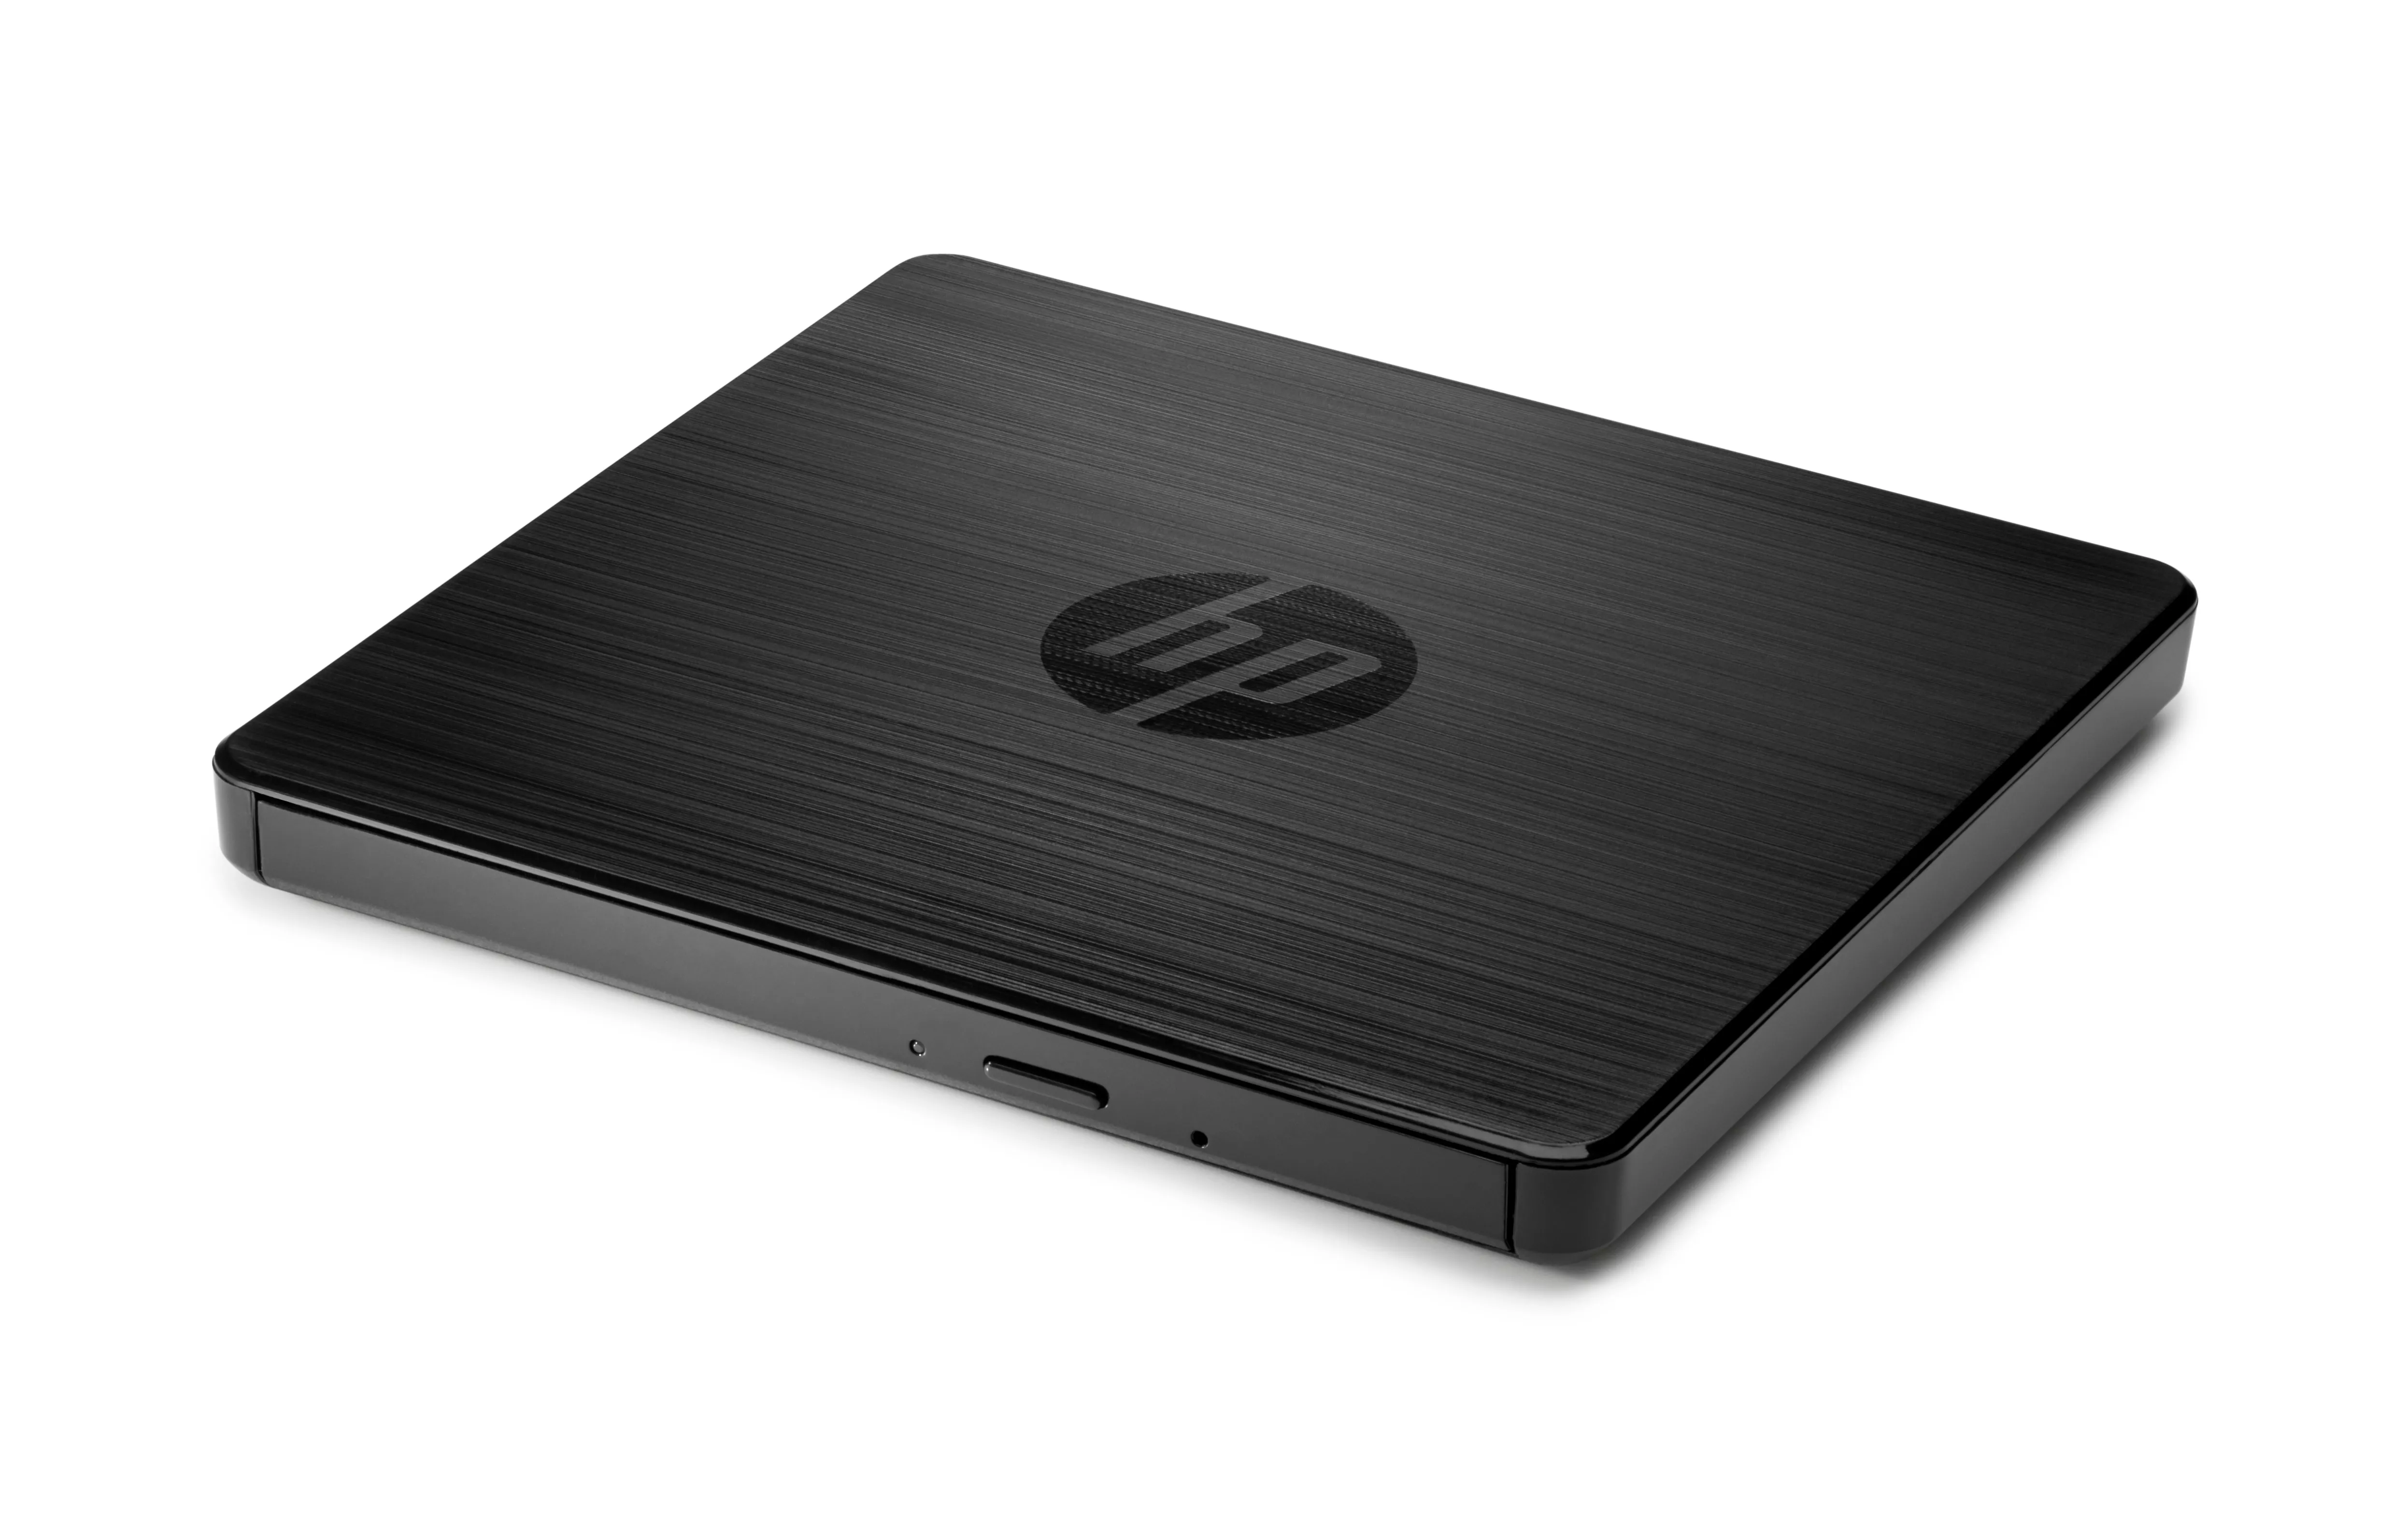 Achat HP USB External DVDRW Drive PROJEKT Retail au meilleur prix